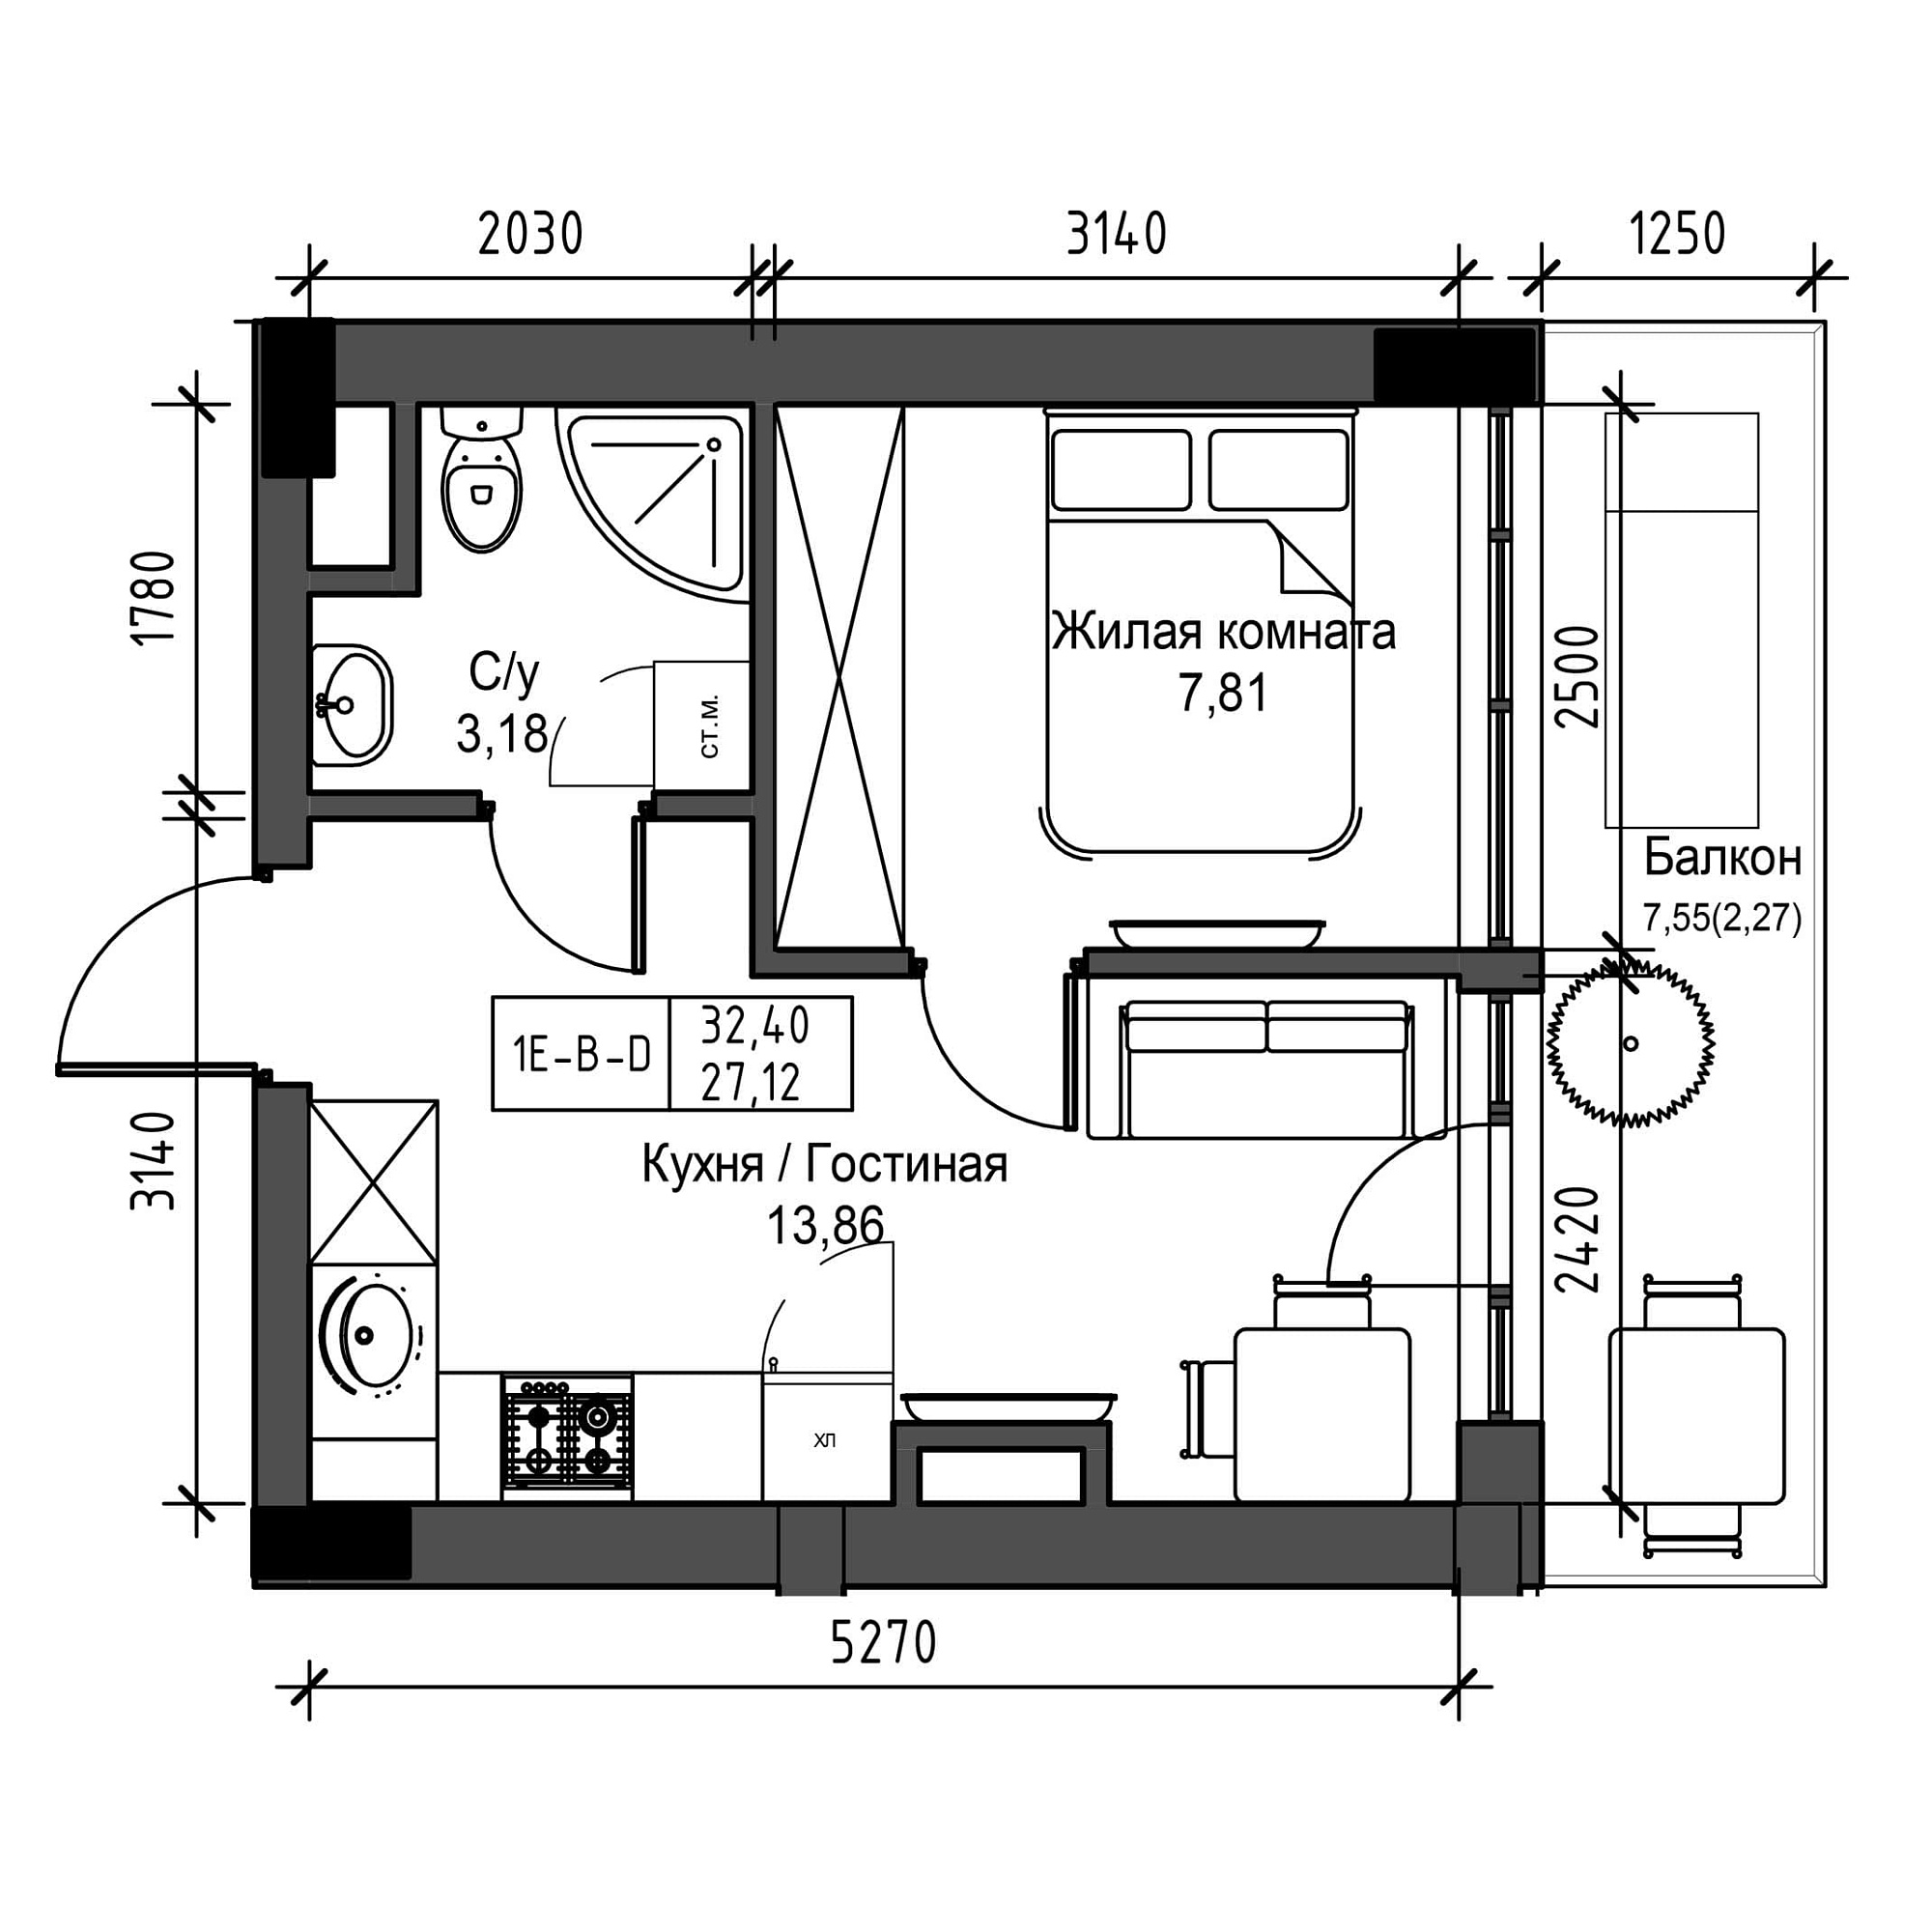 Планування 1-к квартира площею 27.12м2, UM-001-05/0003.